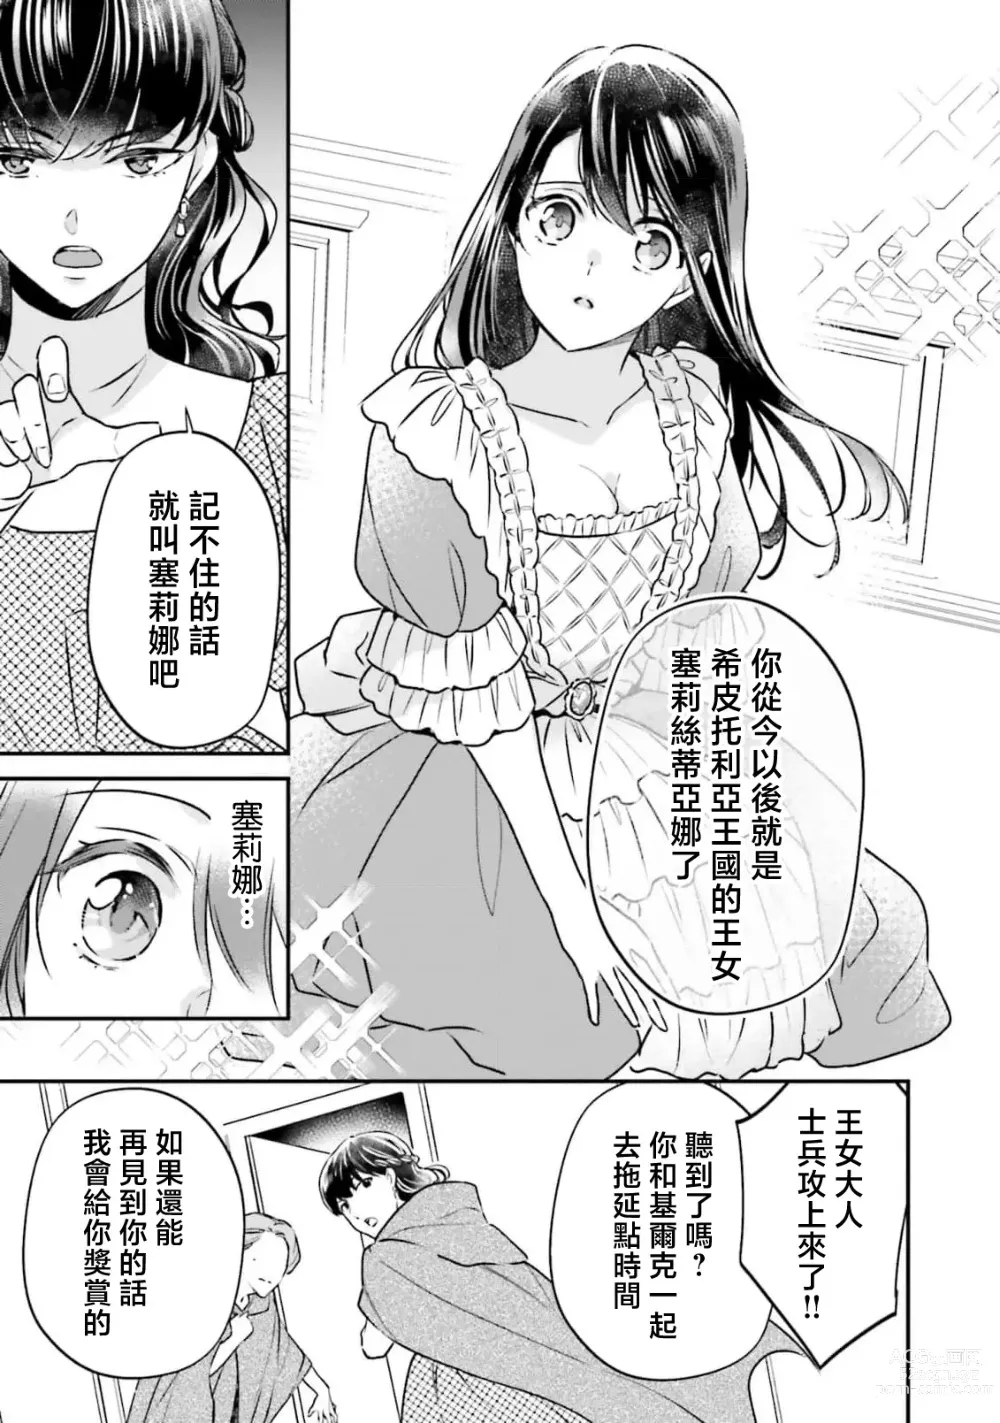 Page 19 of manga 在异世界成为了替身公主被霸王掳走了 1-6